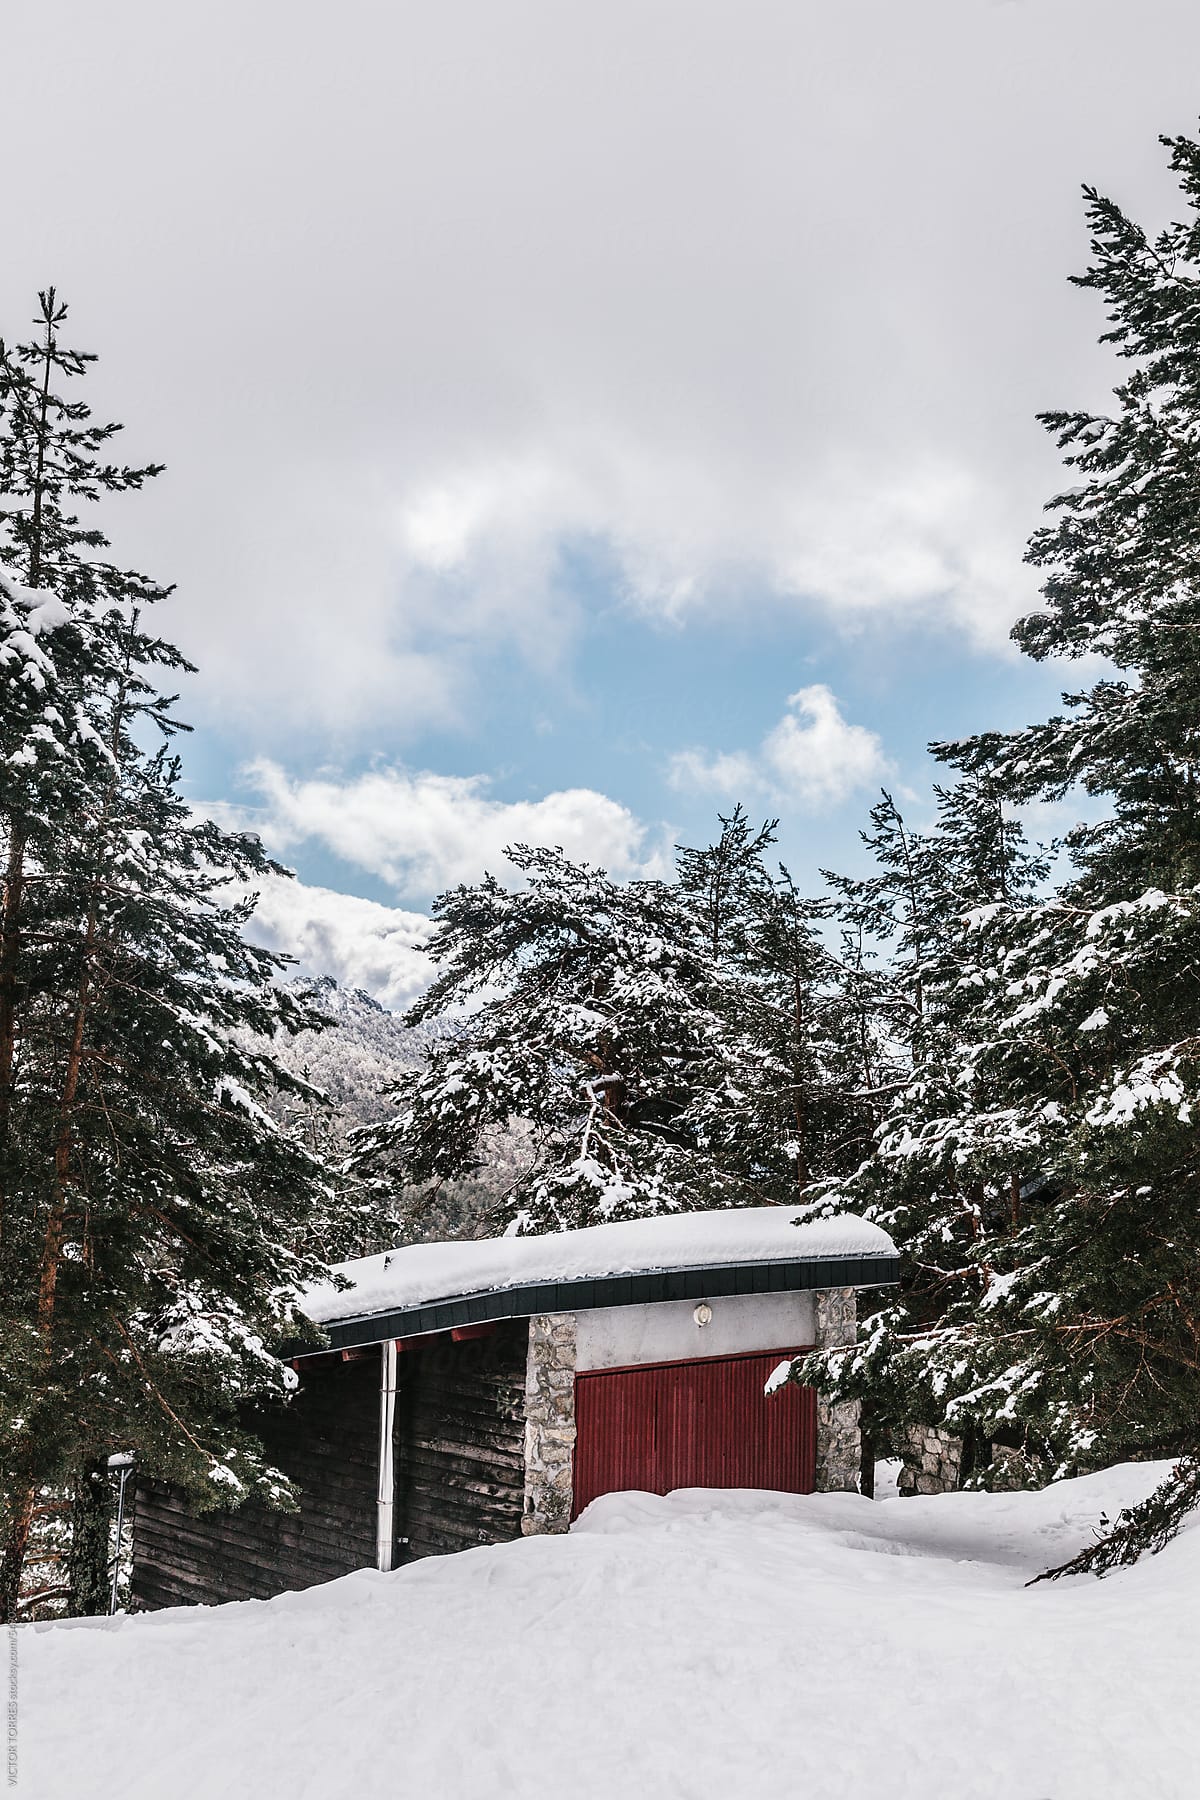 Small Cabin in a Snowy Landscape